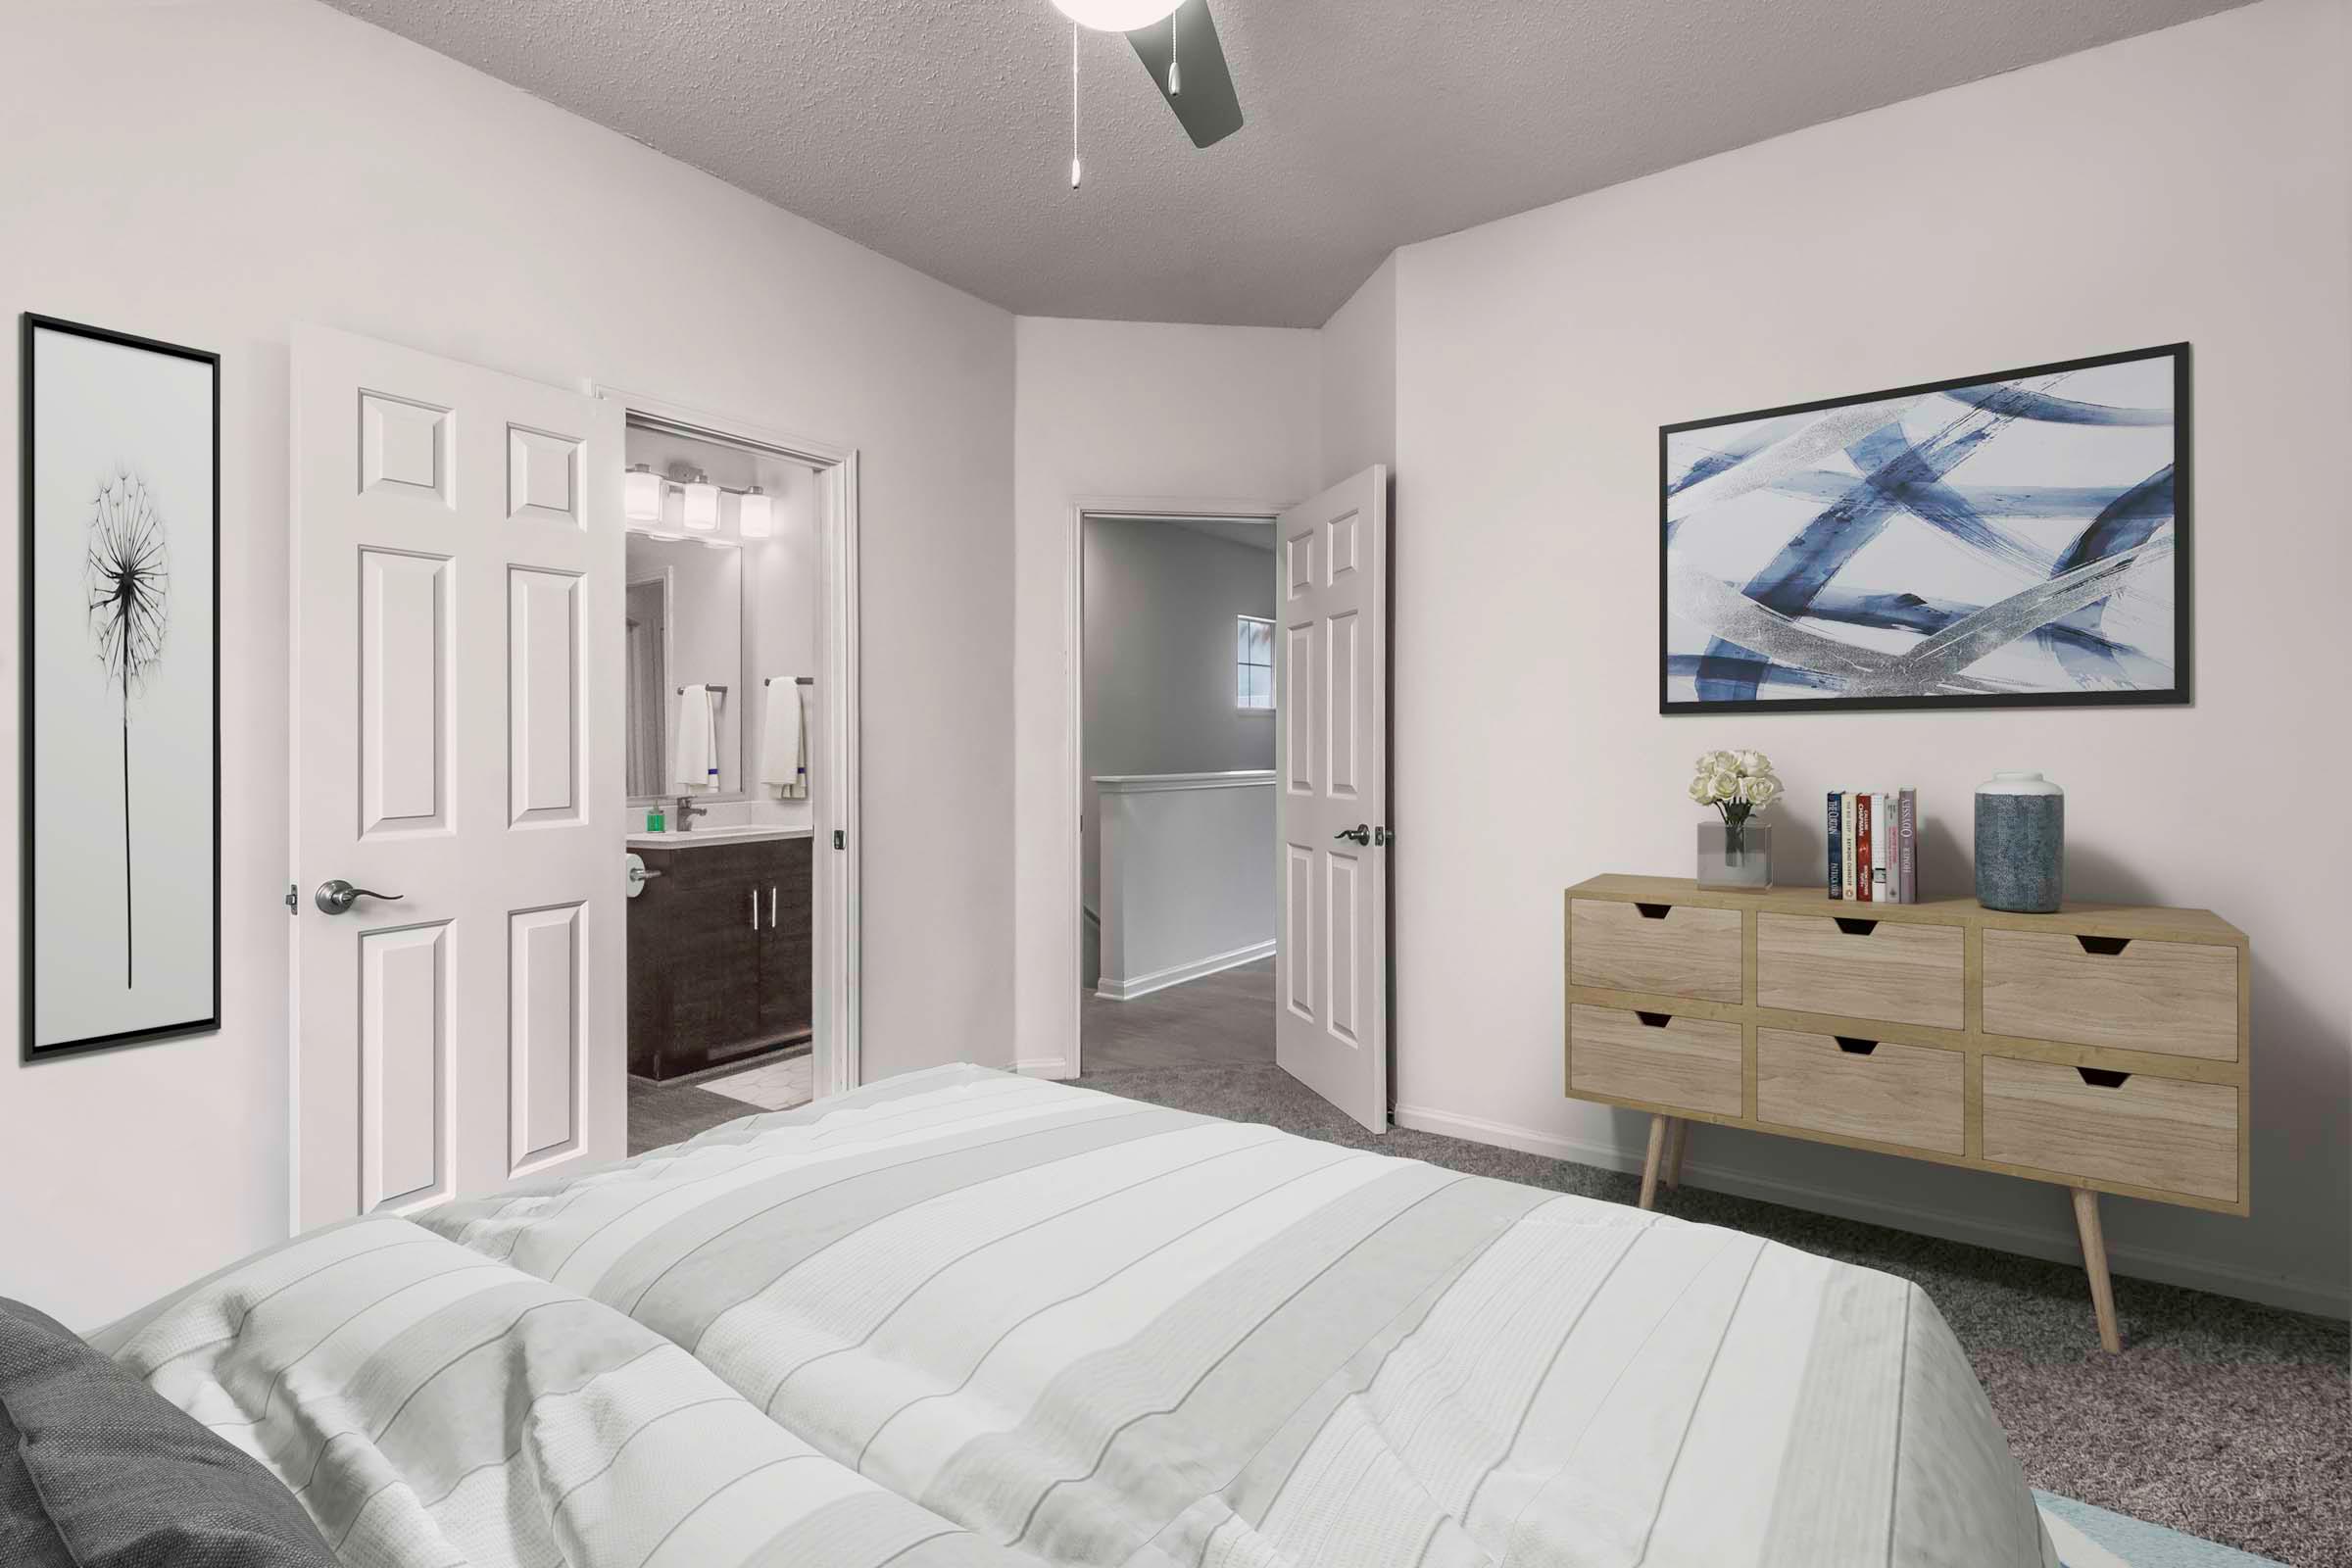 Townhome bedroom with ensuite bathroom carpet flooring and ceiling fan Camden Deerfield Apartments Alpharetta (770)872-6592